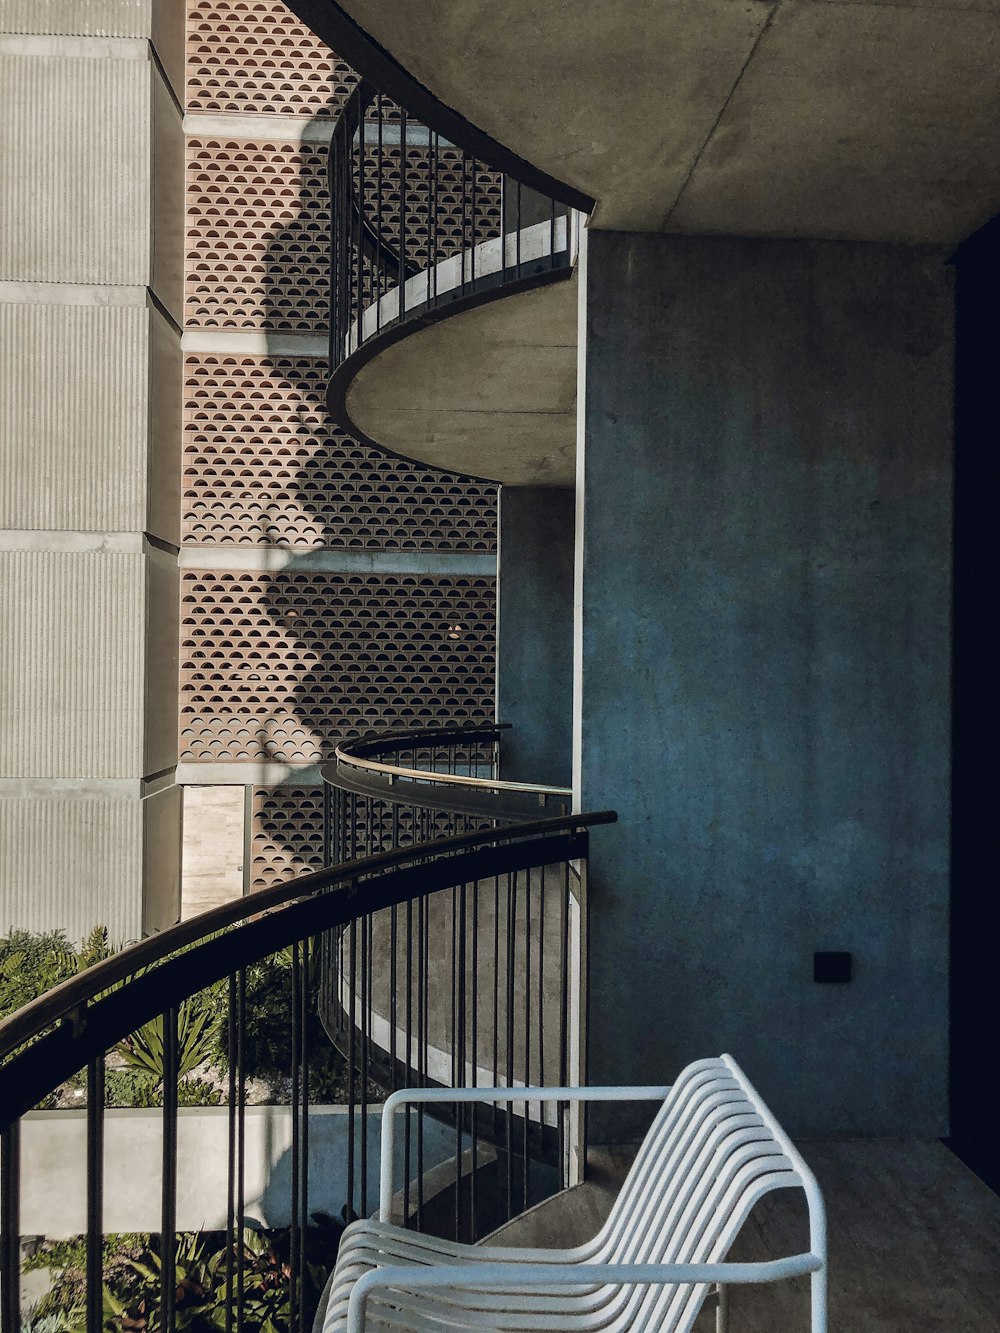 black metal spiral staircase near brown concrete building during daytime